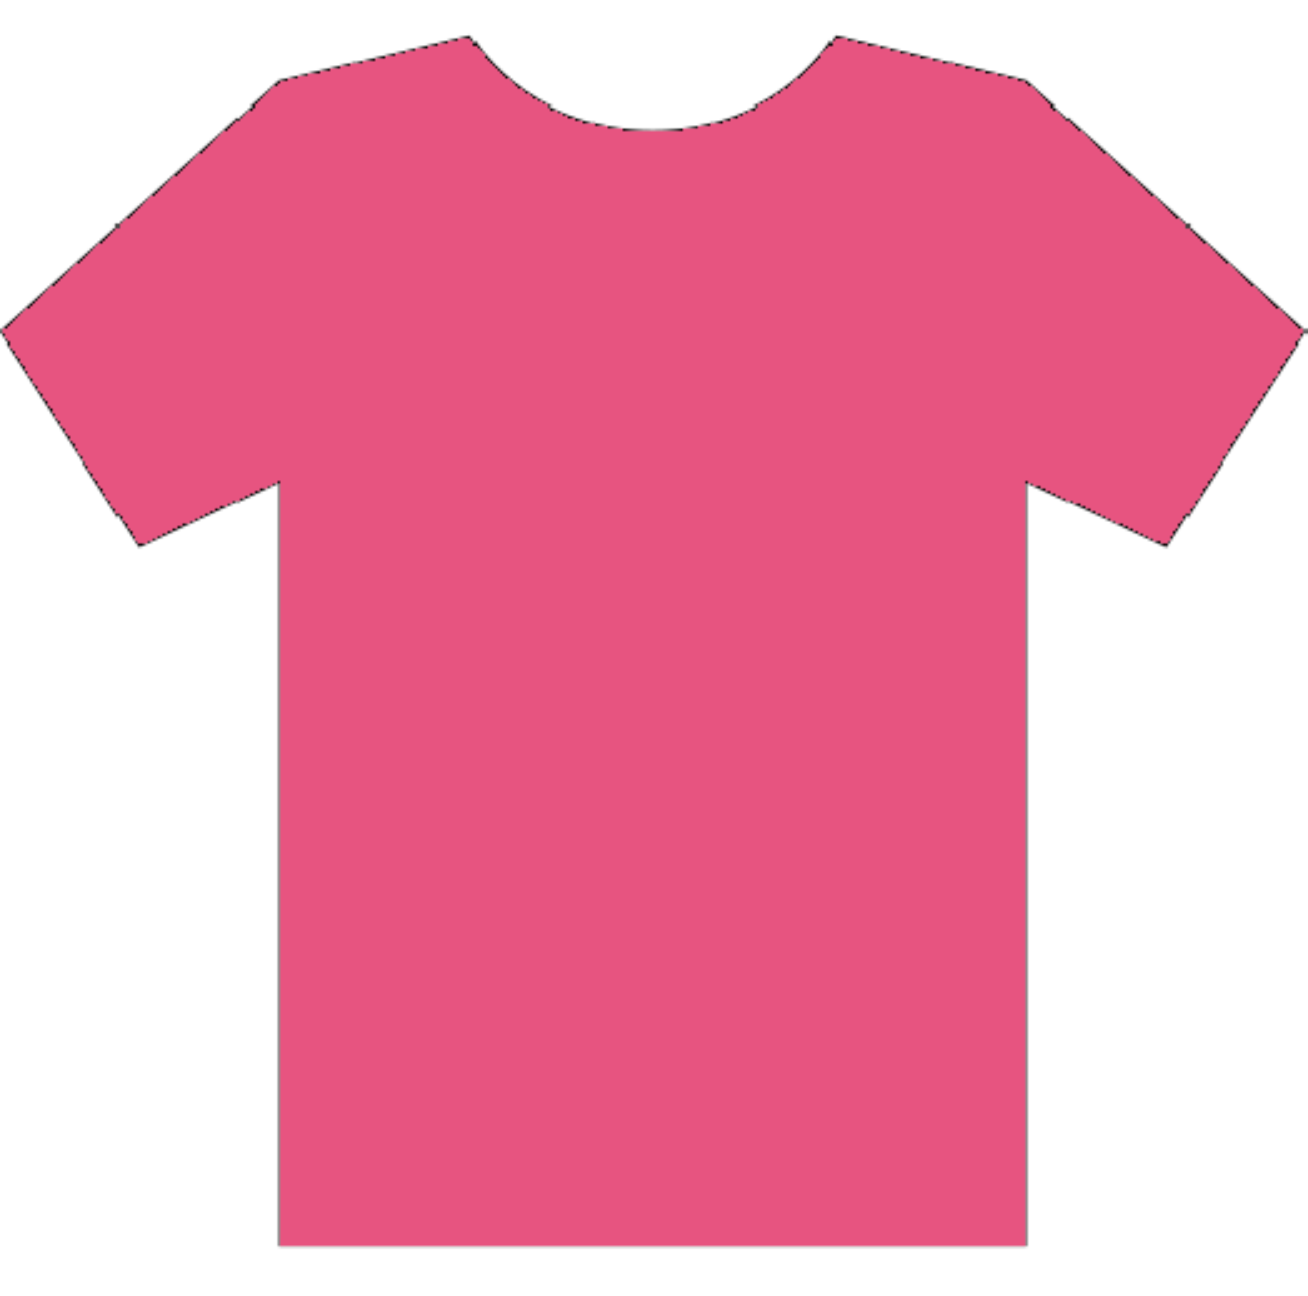 Donate Men's Women's and Children's Clothing